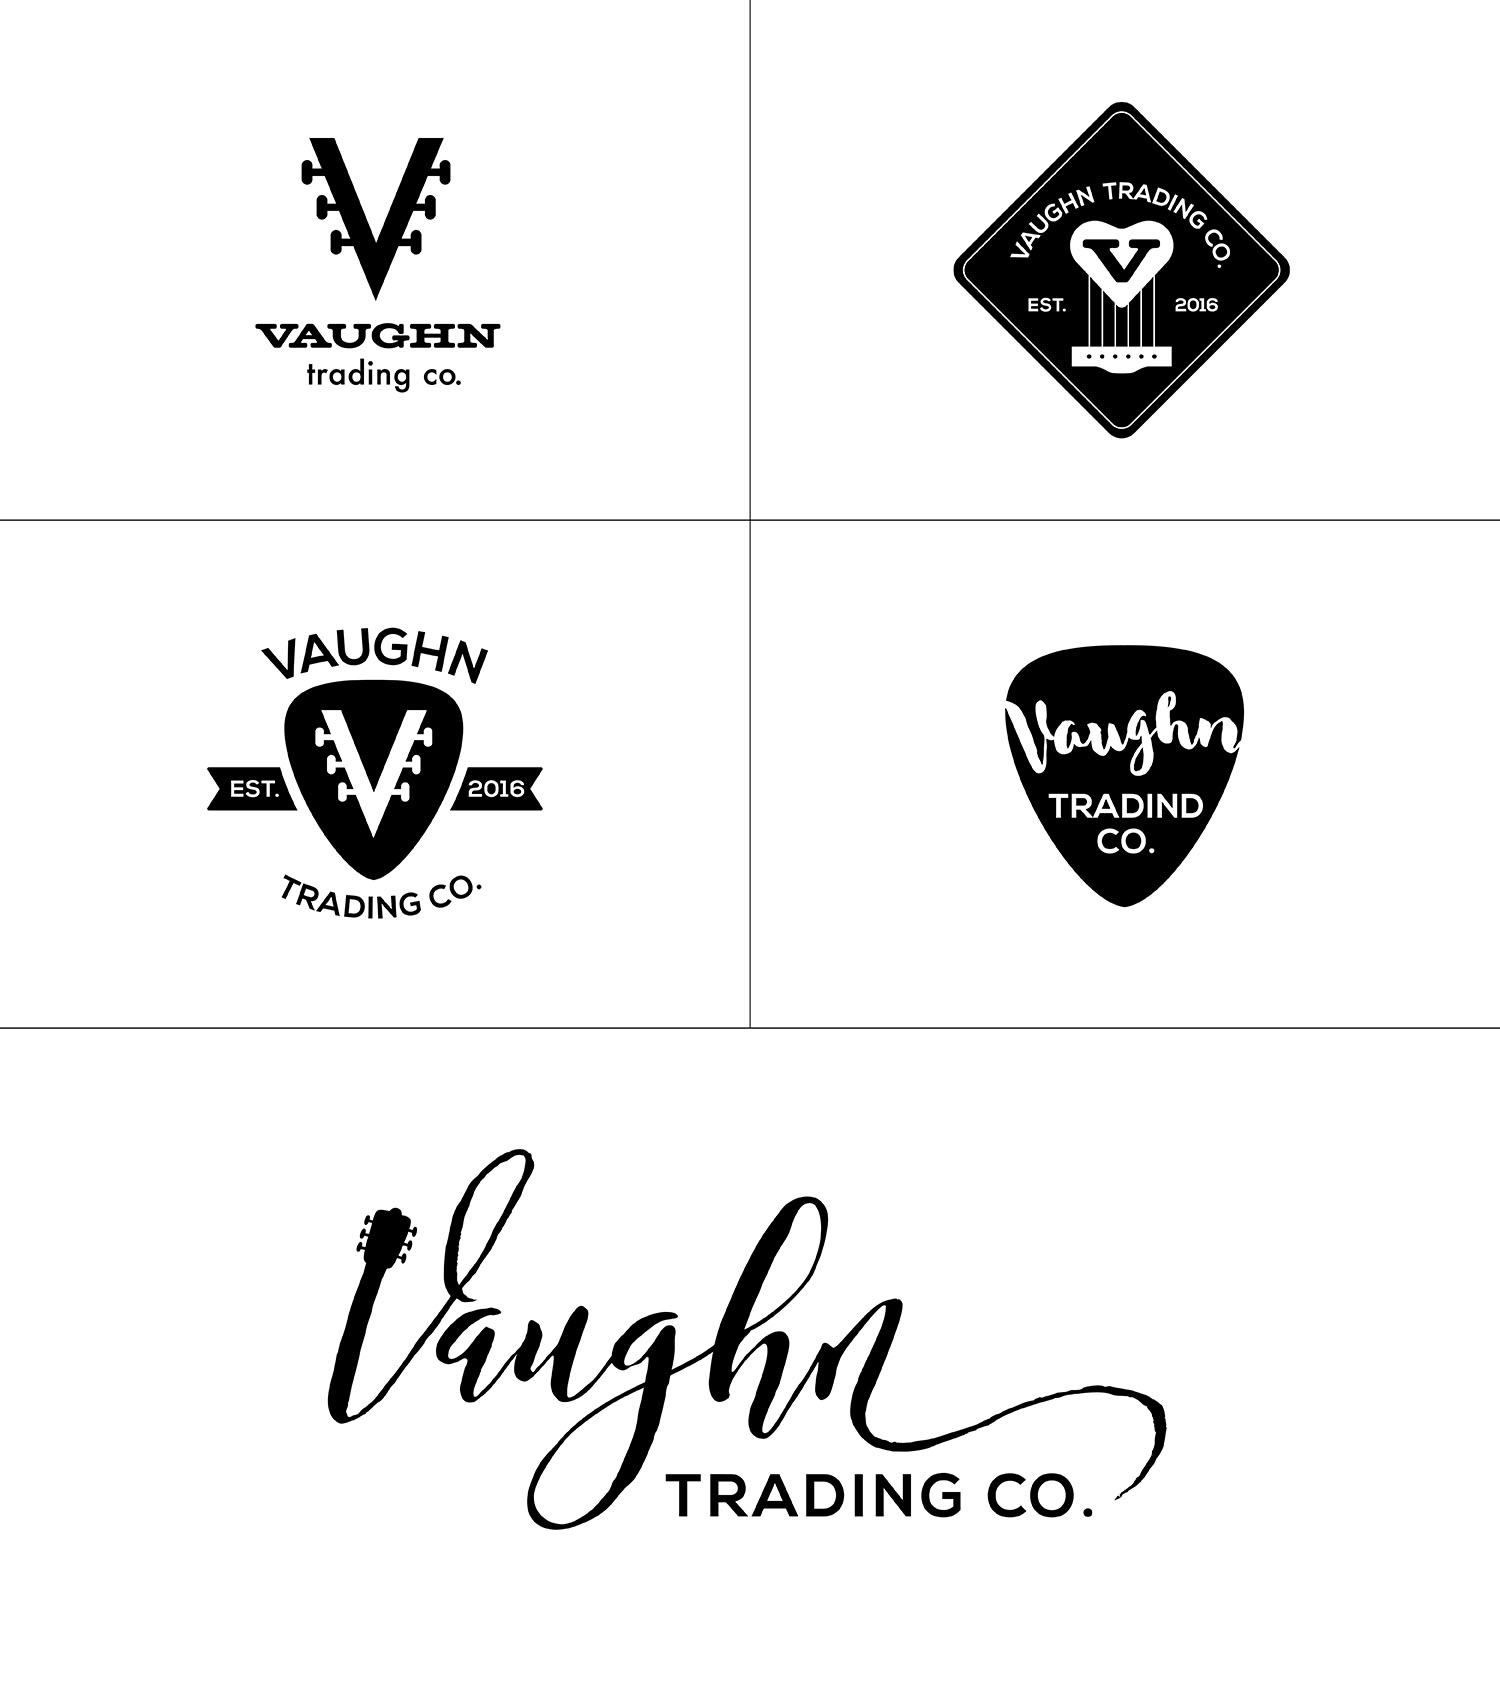 Vaughn Trading Co. Logo Options